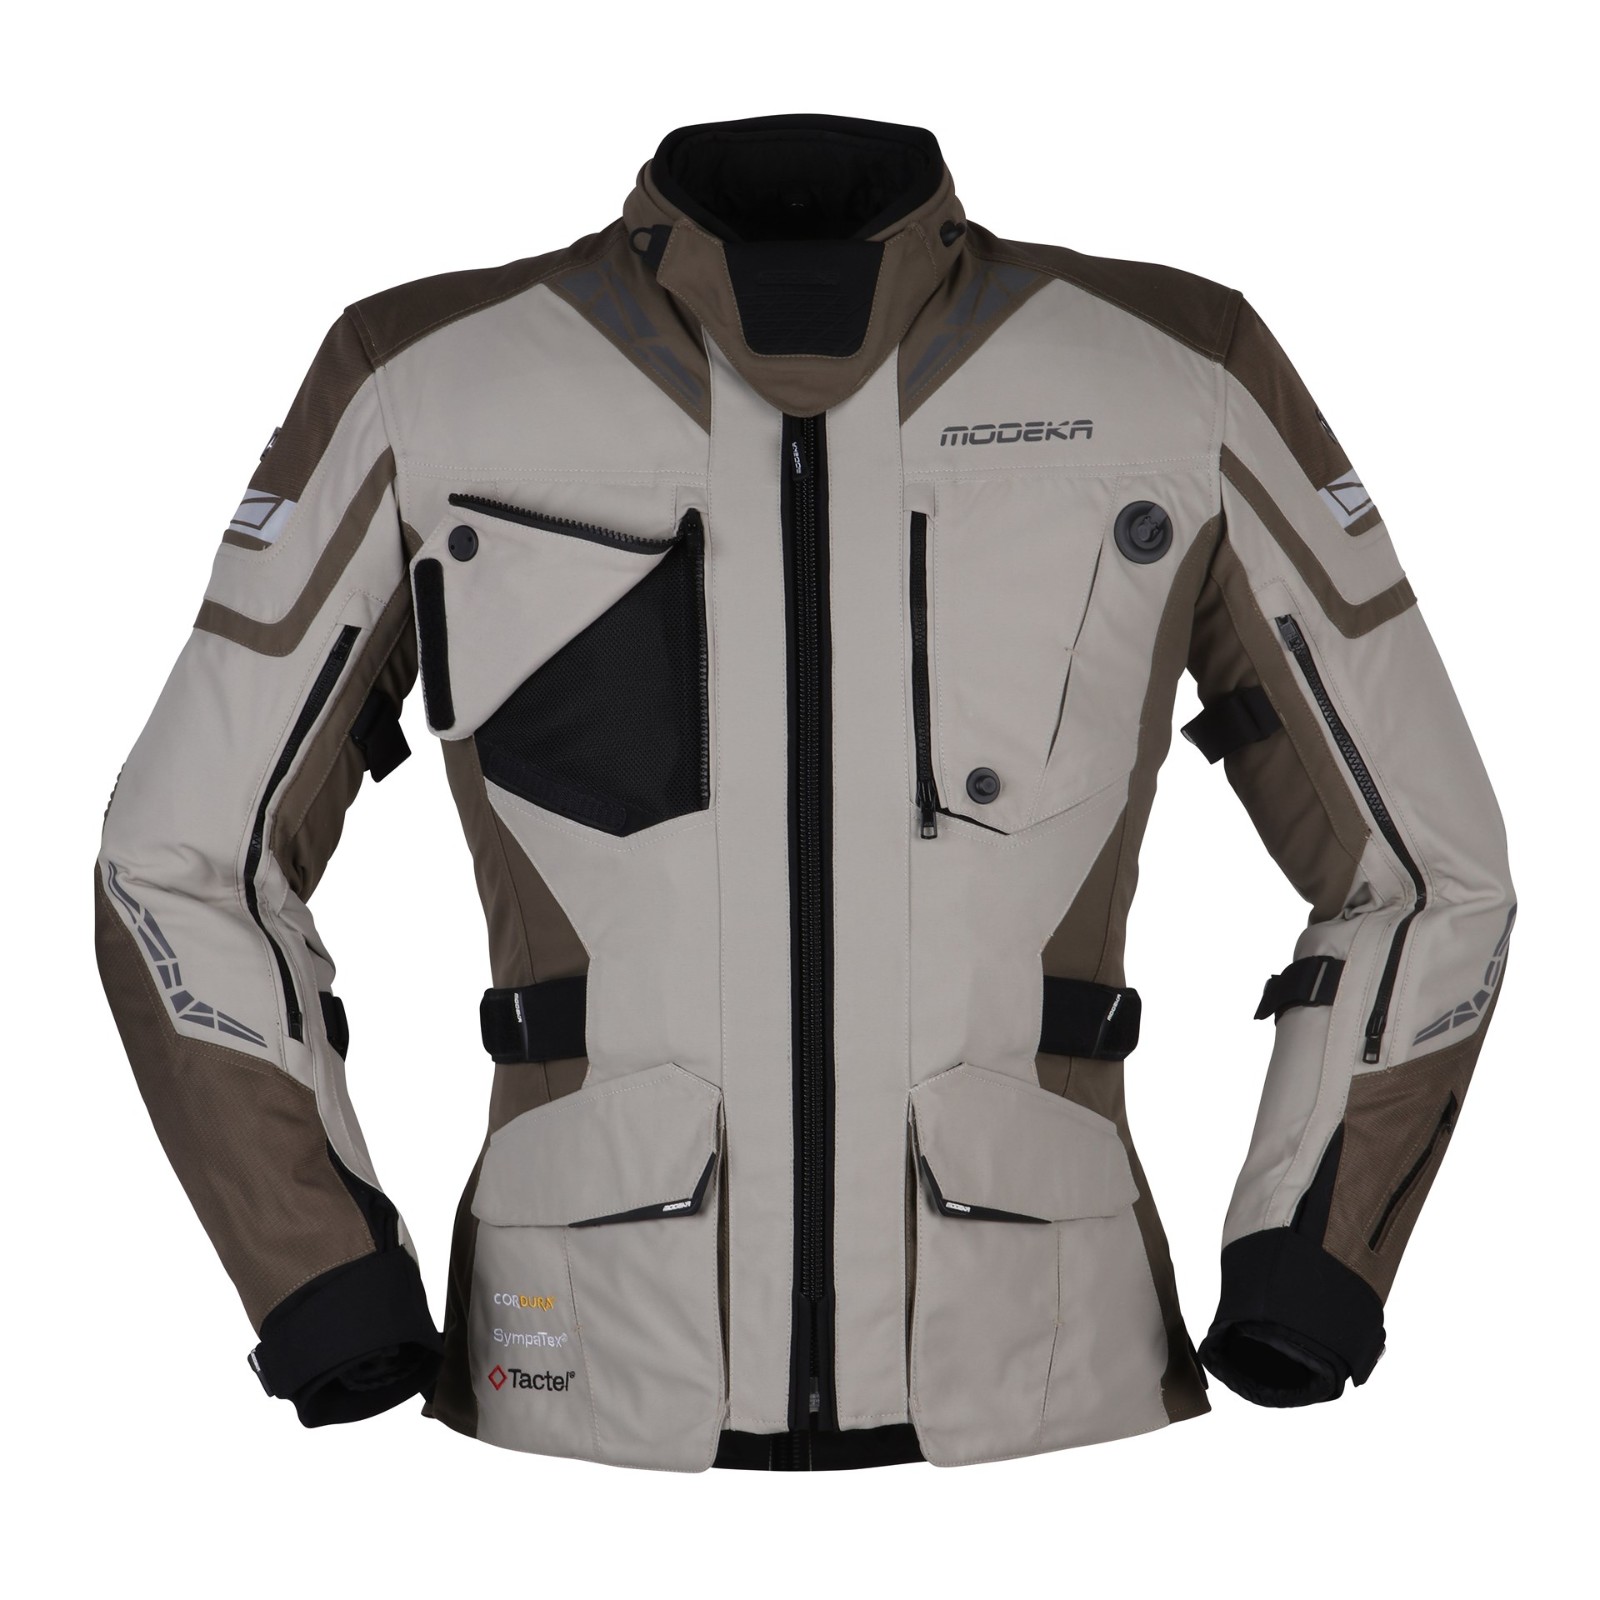 Genuine Leather Vest Motorcycle or Dress Inside Chest Pocket 2 Outside Pockets XL for sale online 